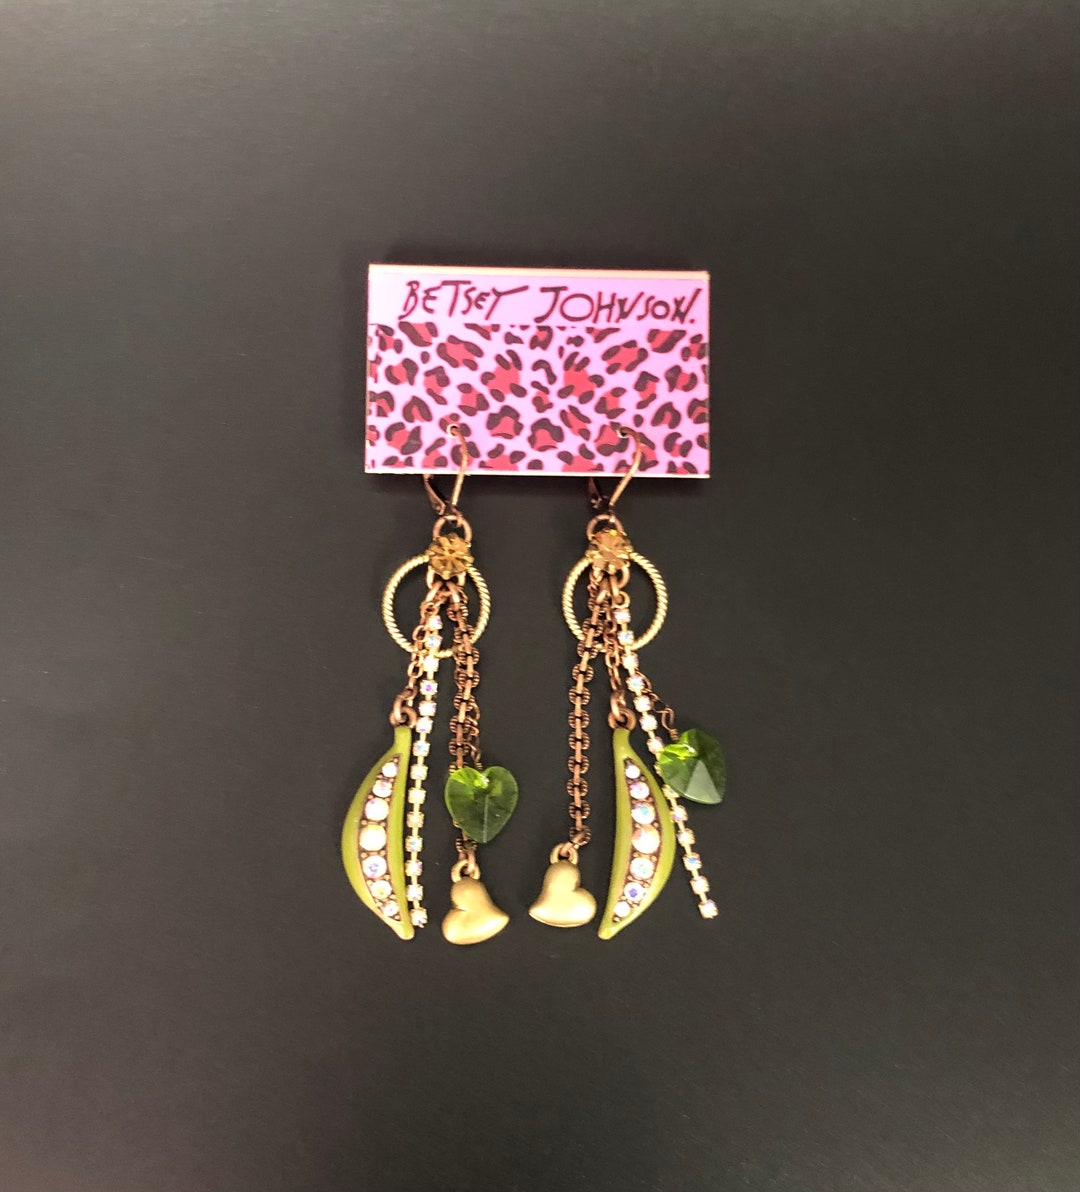 Betsey Johnson Pea With Heart Earrings Jewelry - Etsy